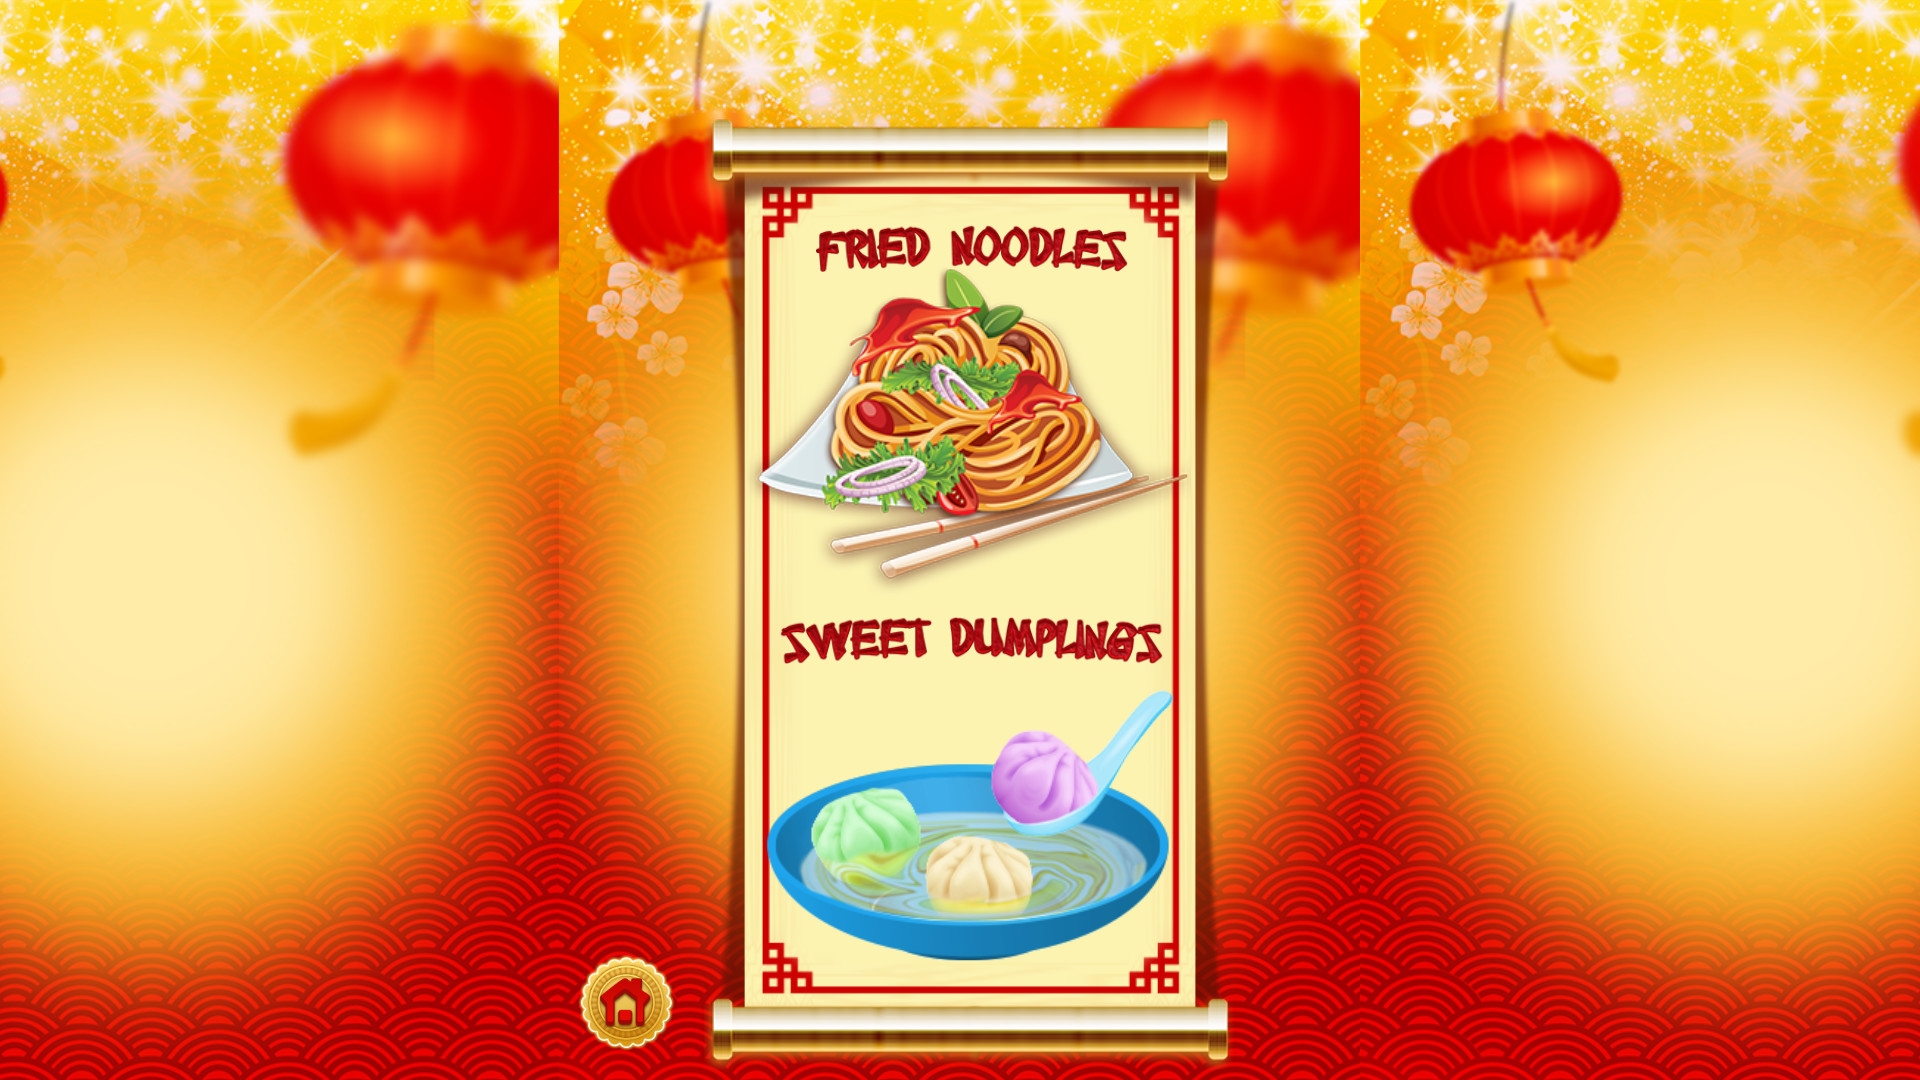 Masterchef Chinese Food Edition Steam CD Key